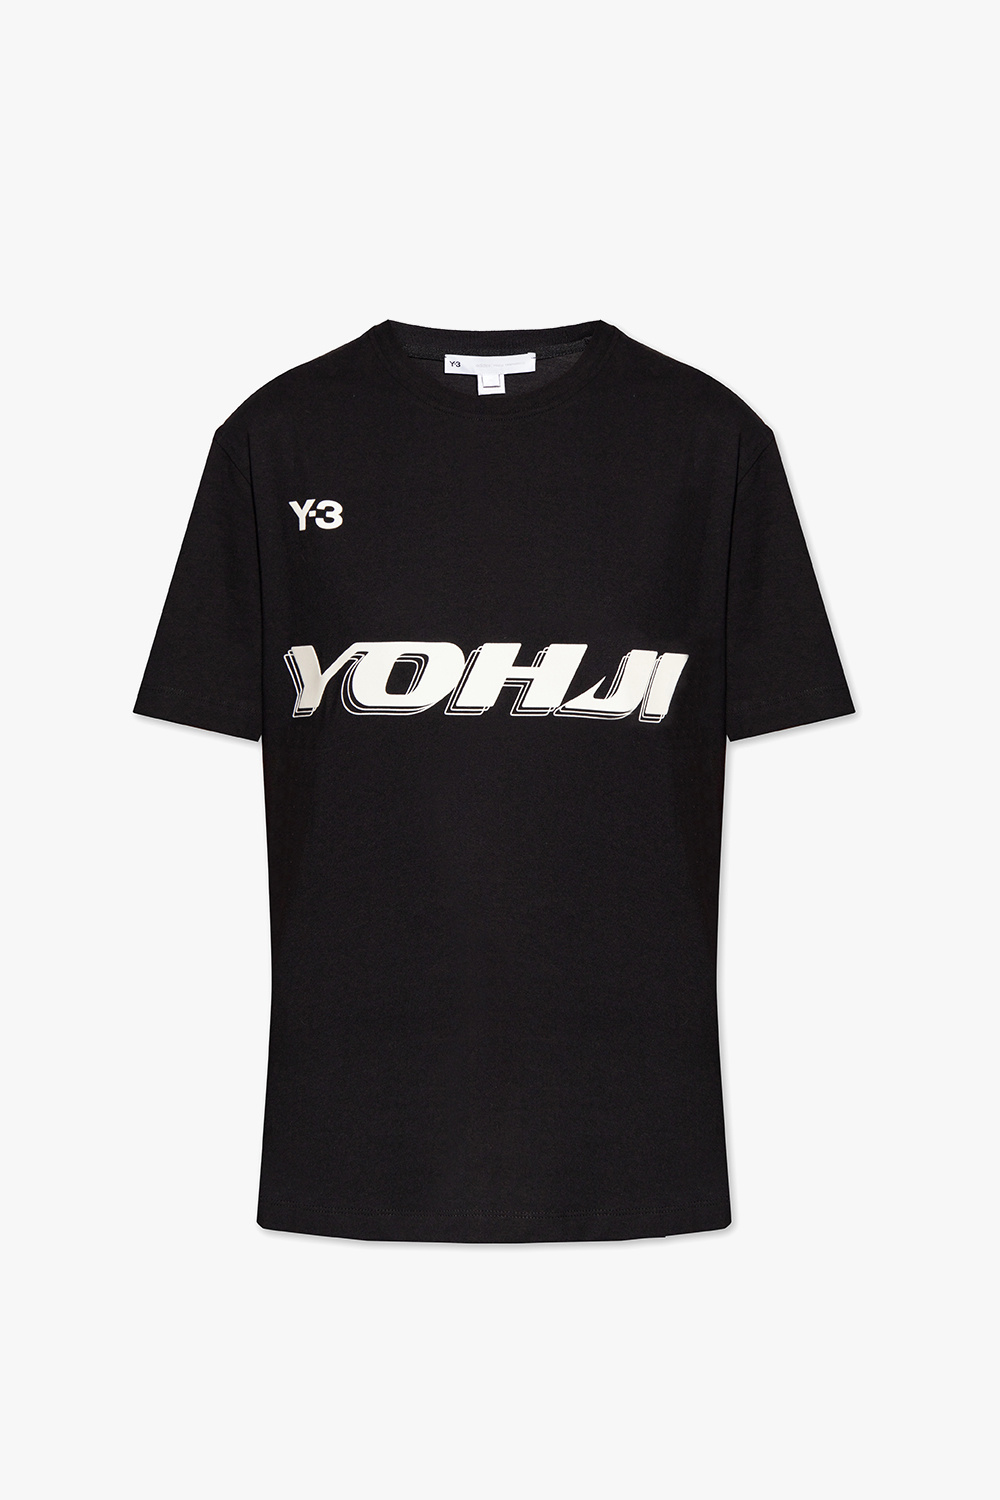 SchaferandweinerShops Japan - shirt Y - 3 Yohji Yamamoto - Logo T - IRO  WOOL SWEATER